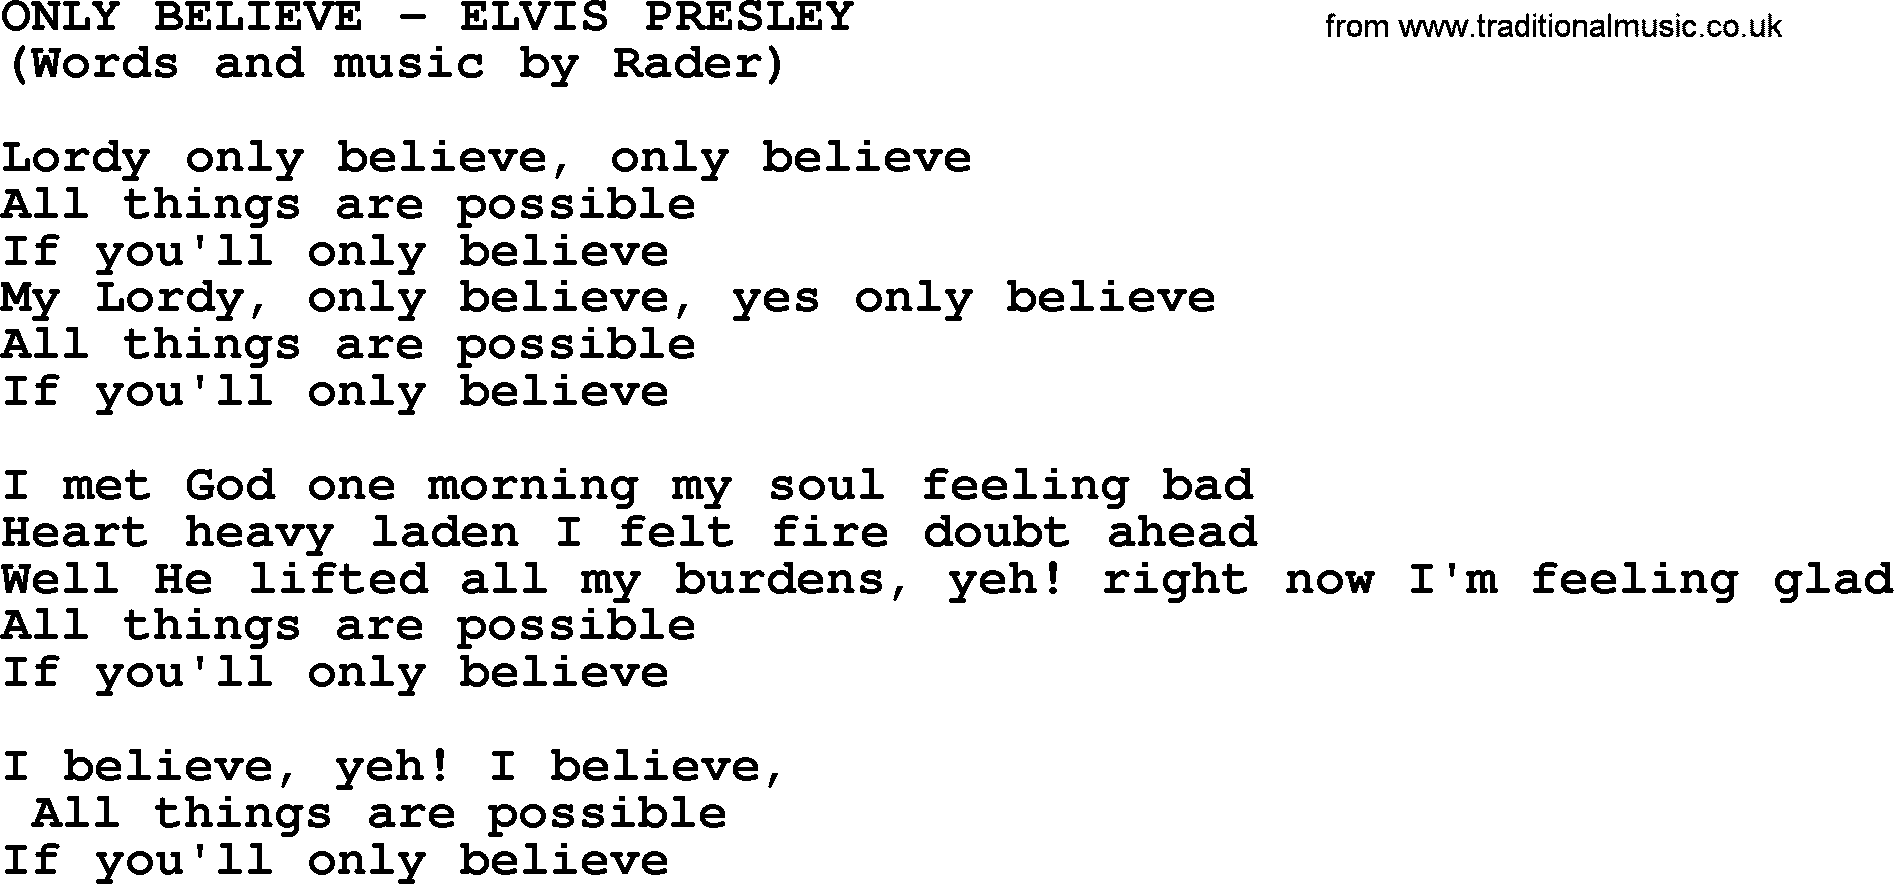 Elvis Presley song: Only Believe lyrics